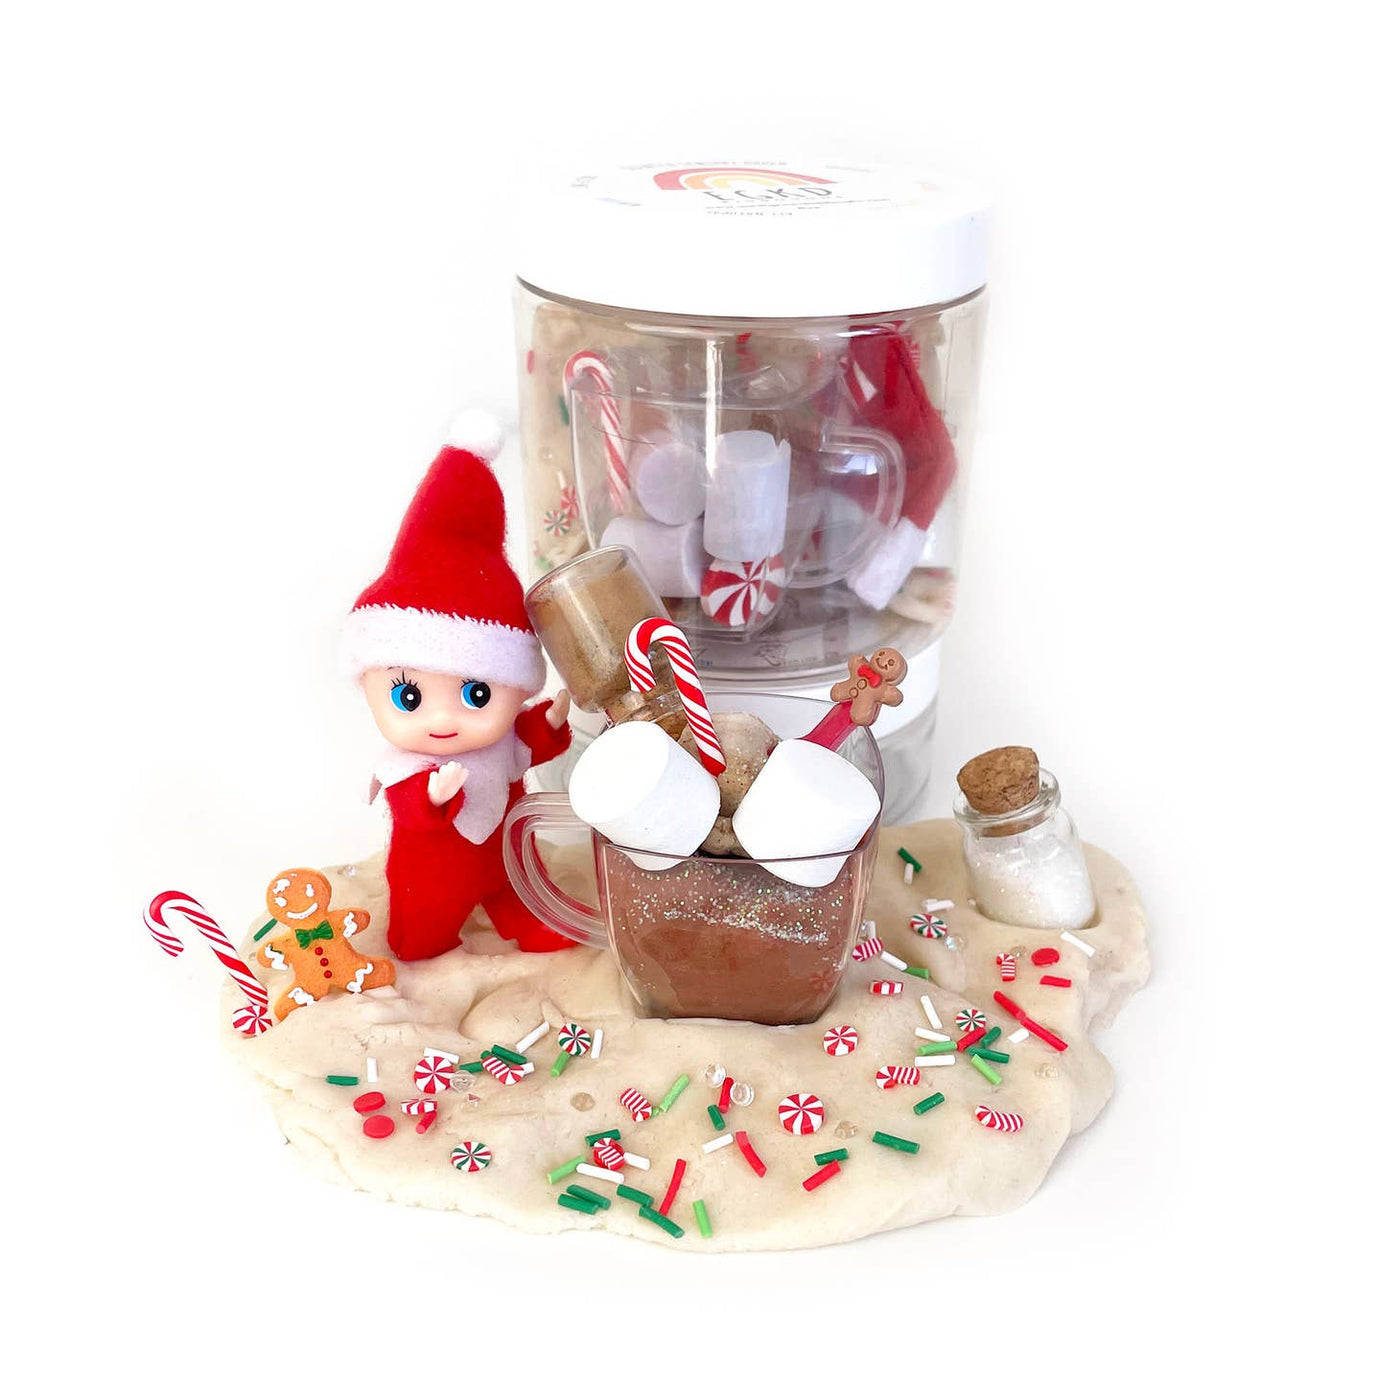 Elf in the Jar Play Dough Kit